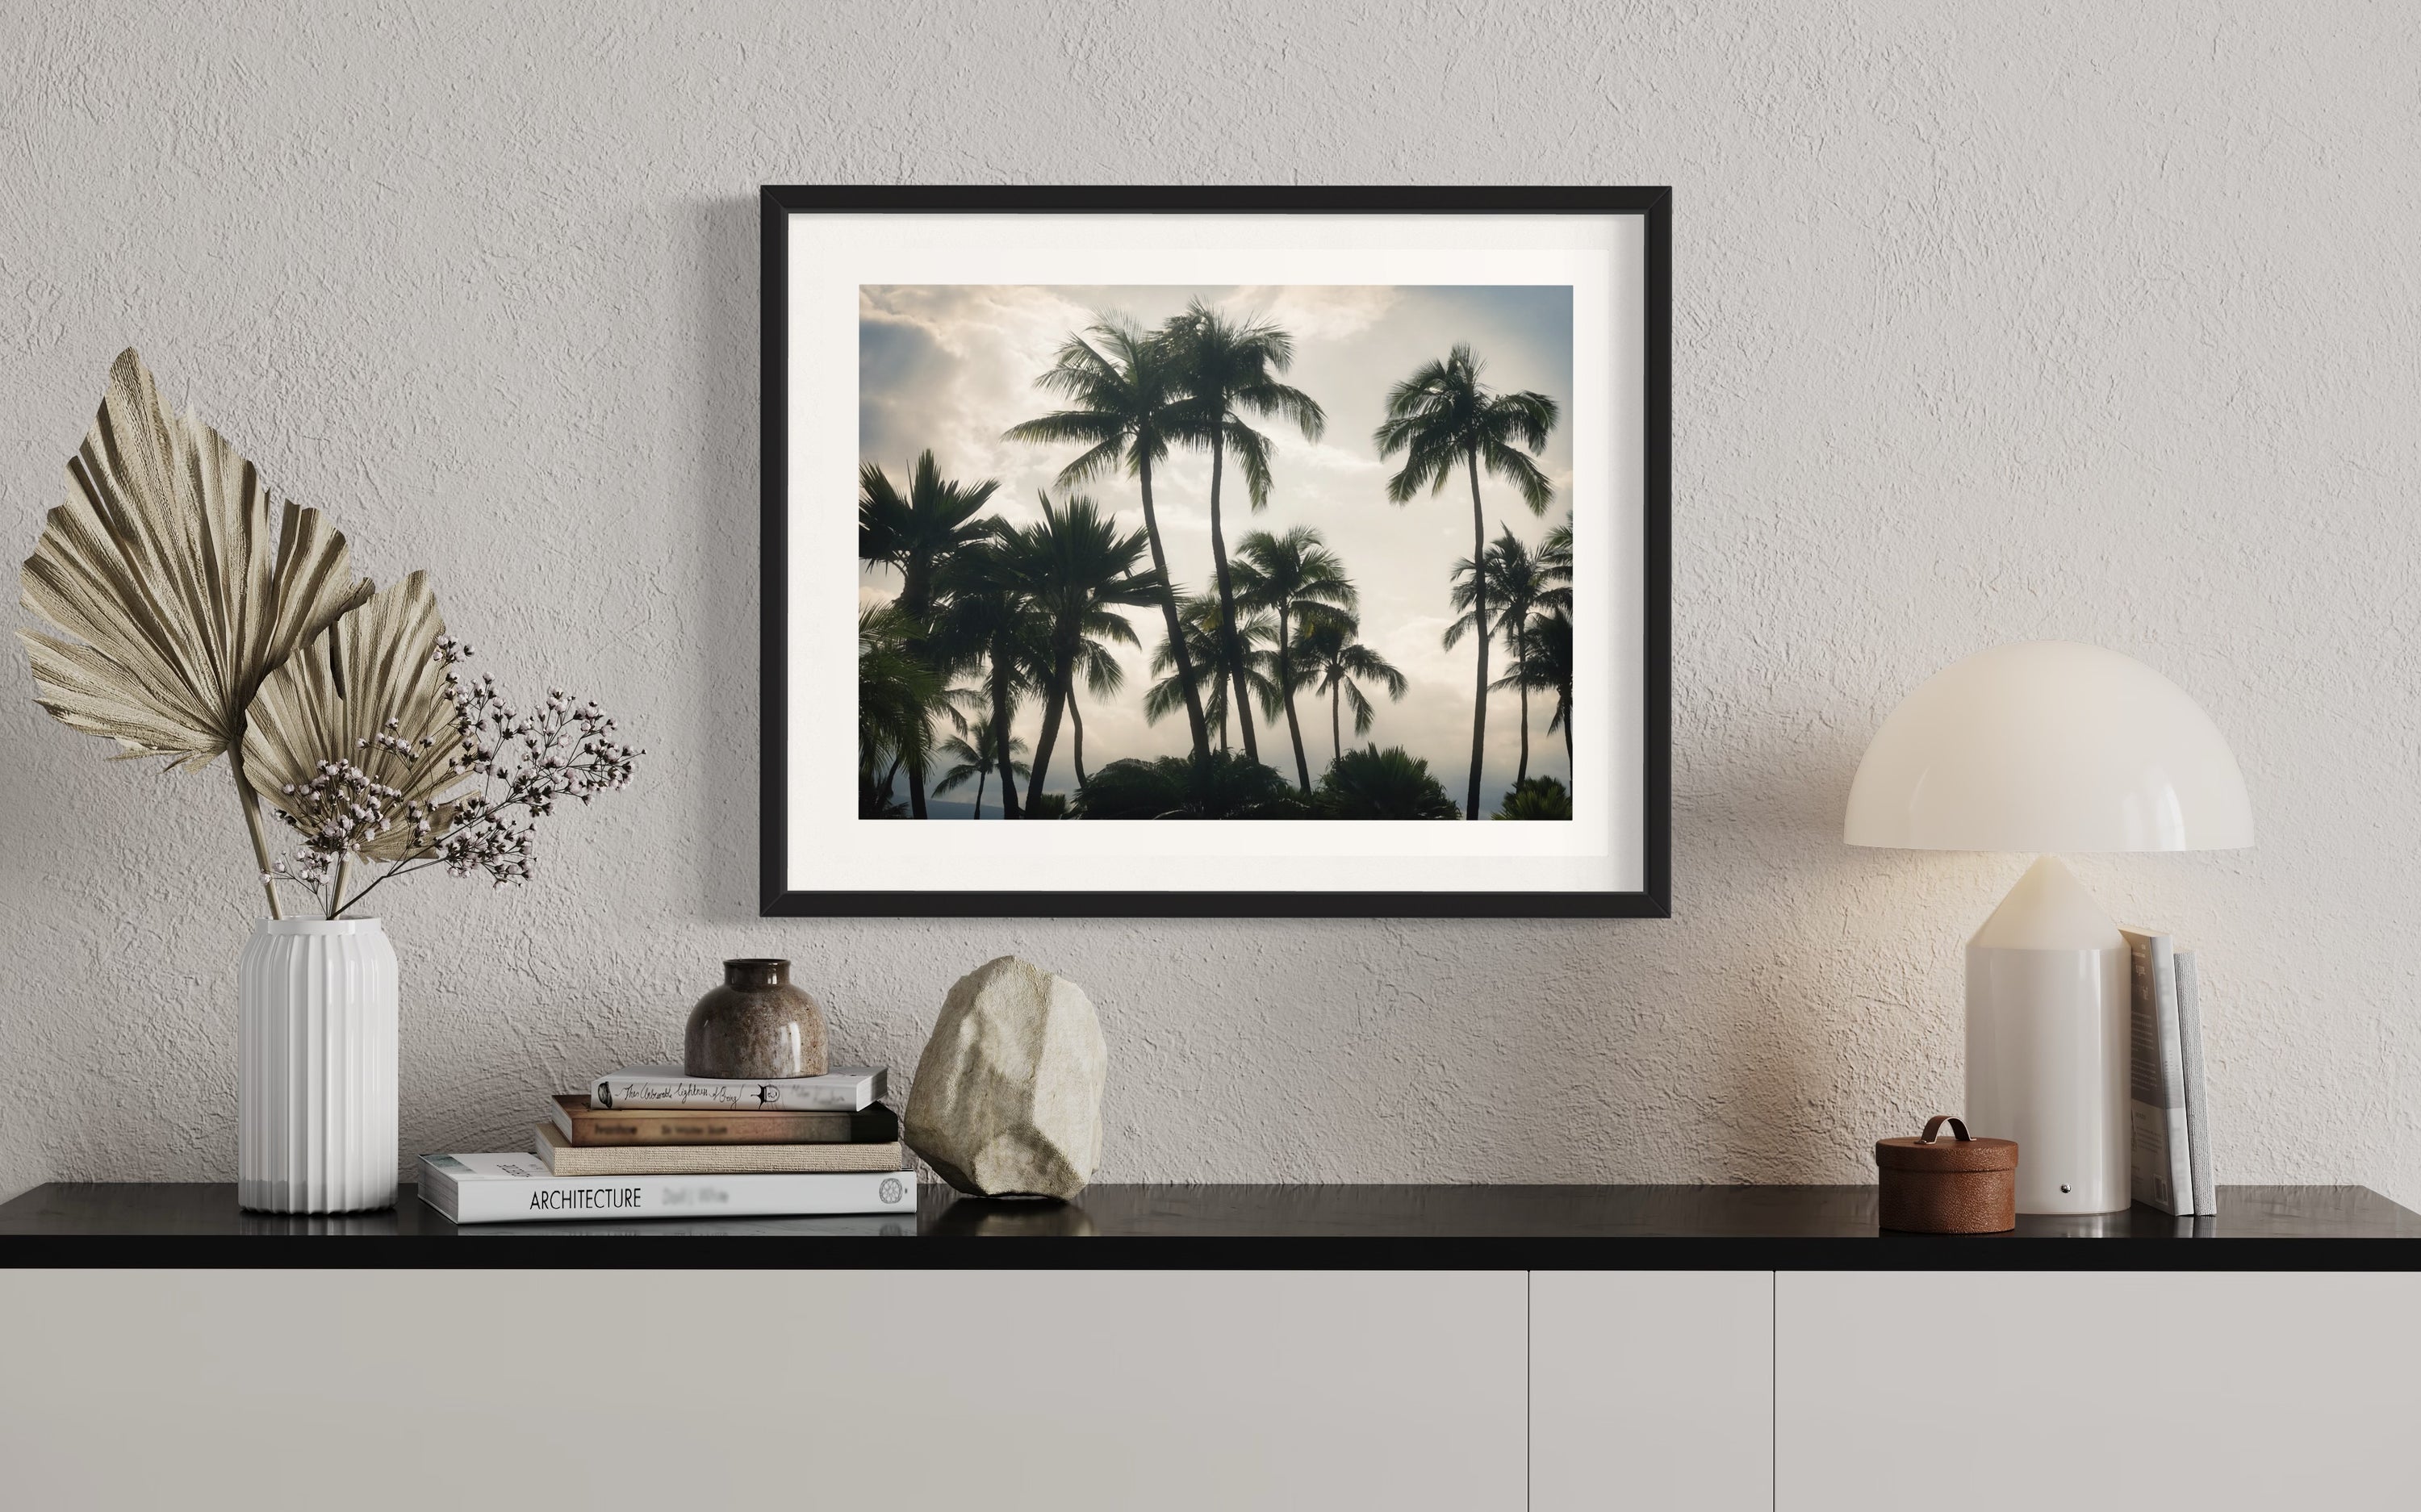 Maui Palms 2.0, Limited Edition Print